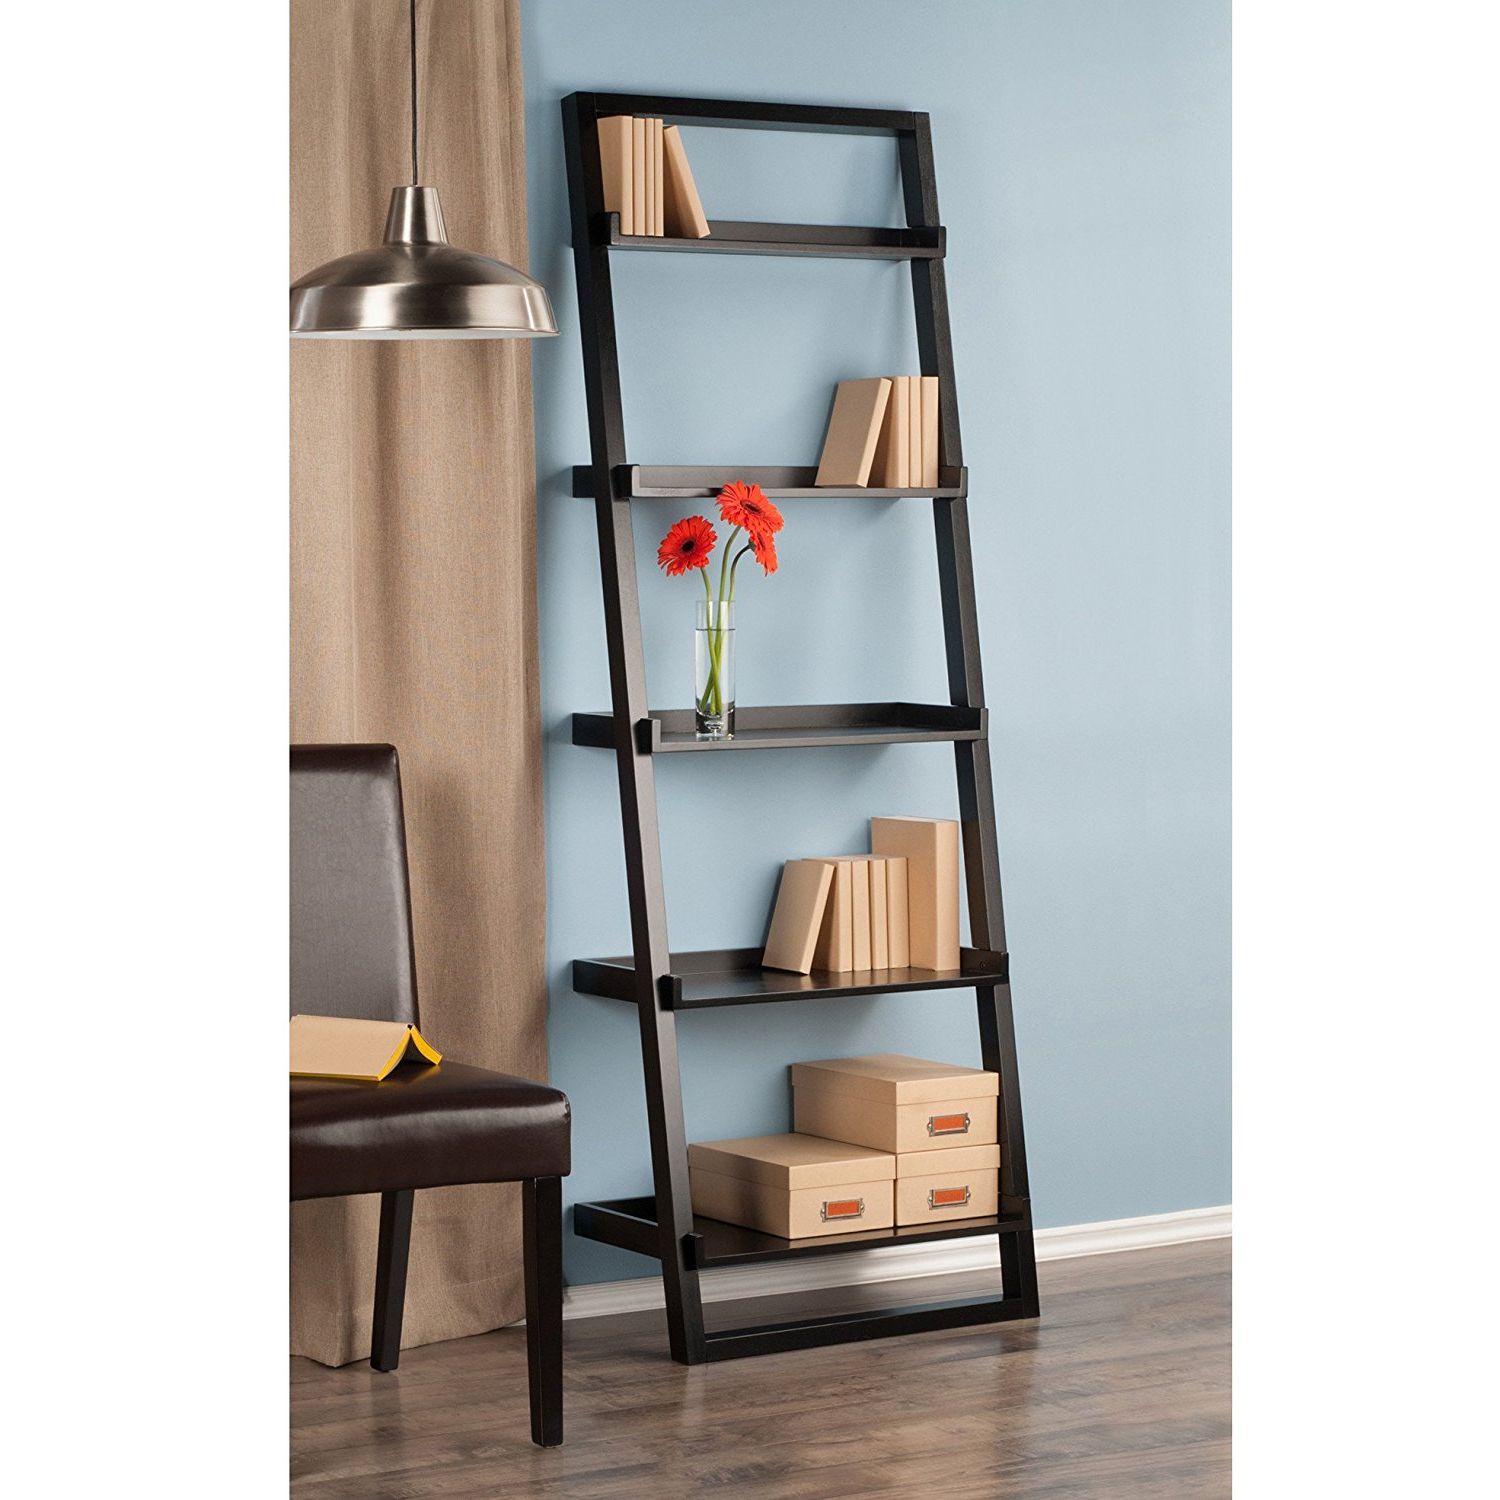 2 Shelf Black Ladder Desks In 2019 Buy Home Wall Ladder Shelf Bookcase, Black 5 Shelf Solid Beech Wood And (View 2 of 15)